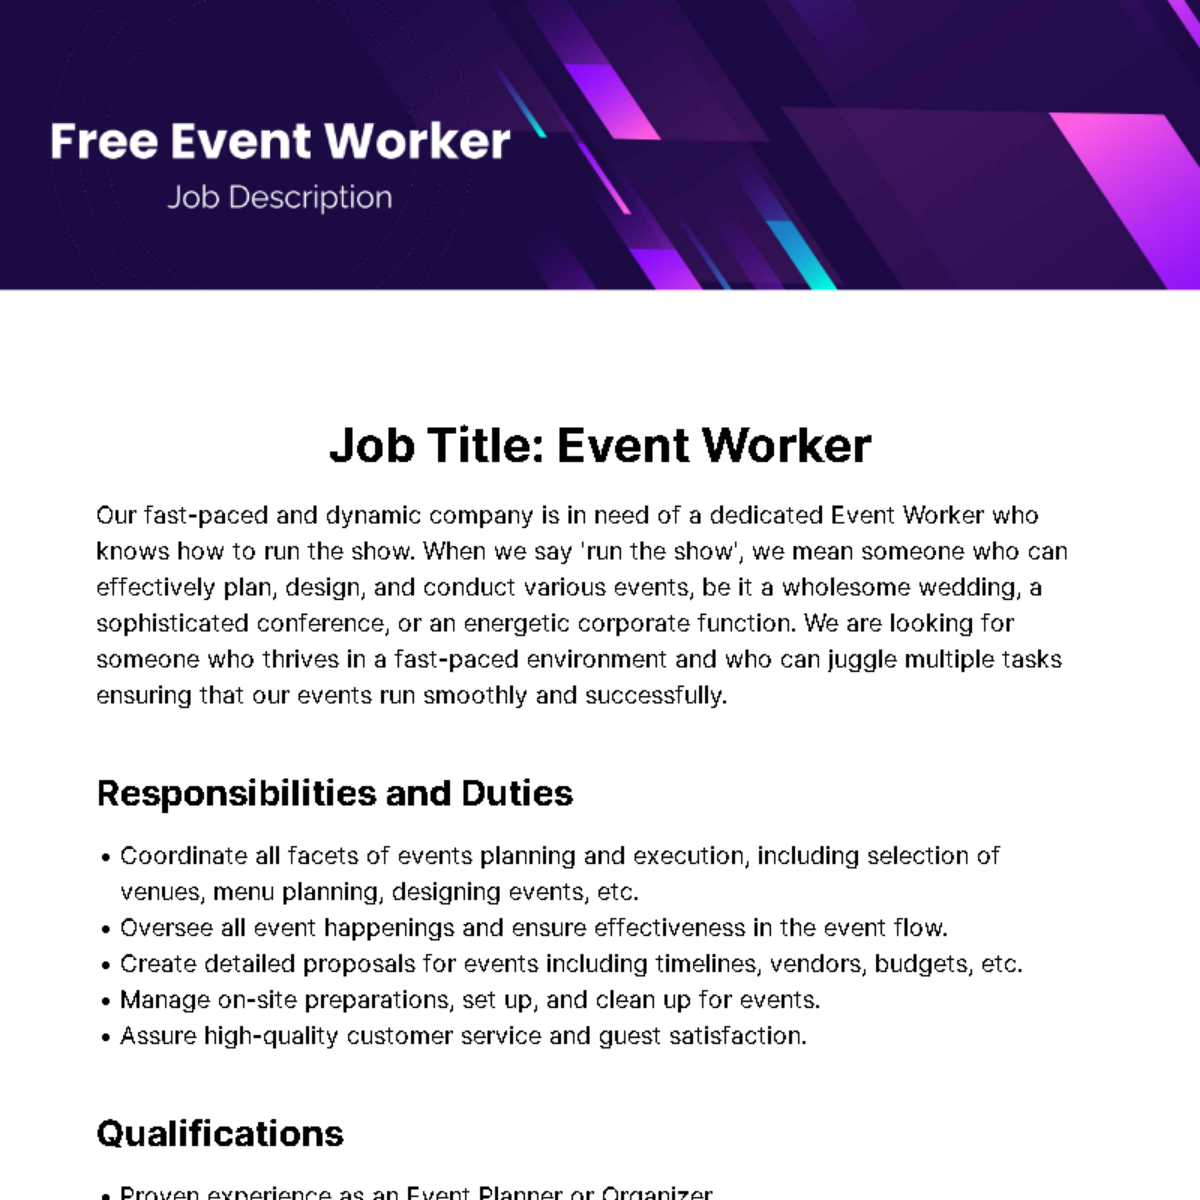 Free Event Worker Job Description Template